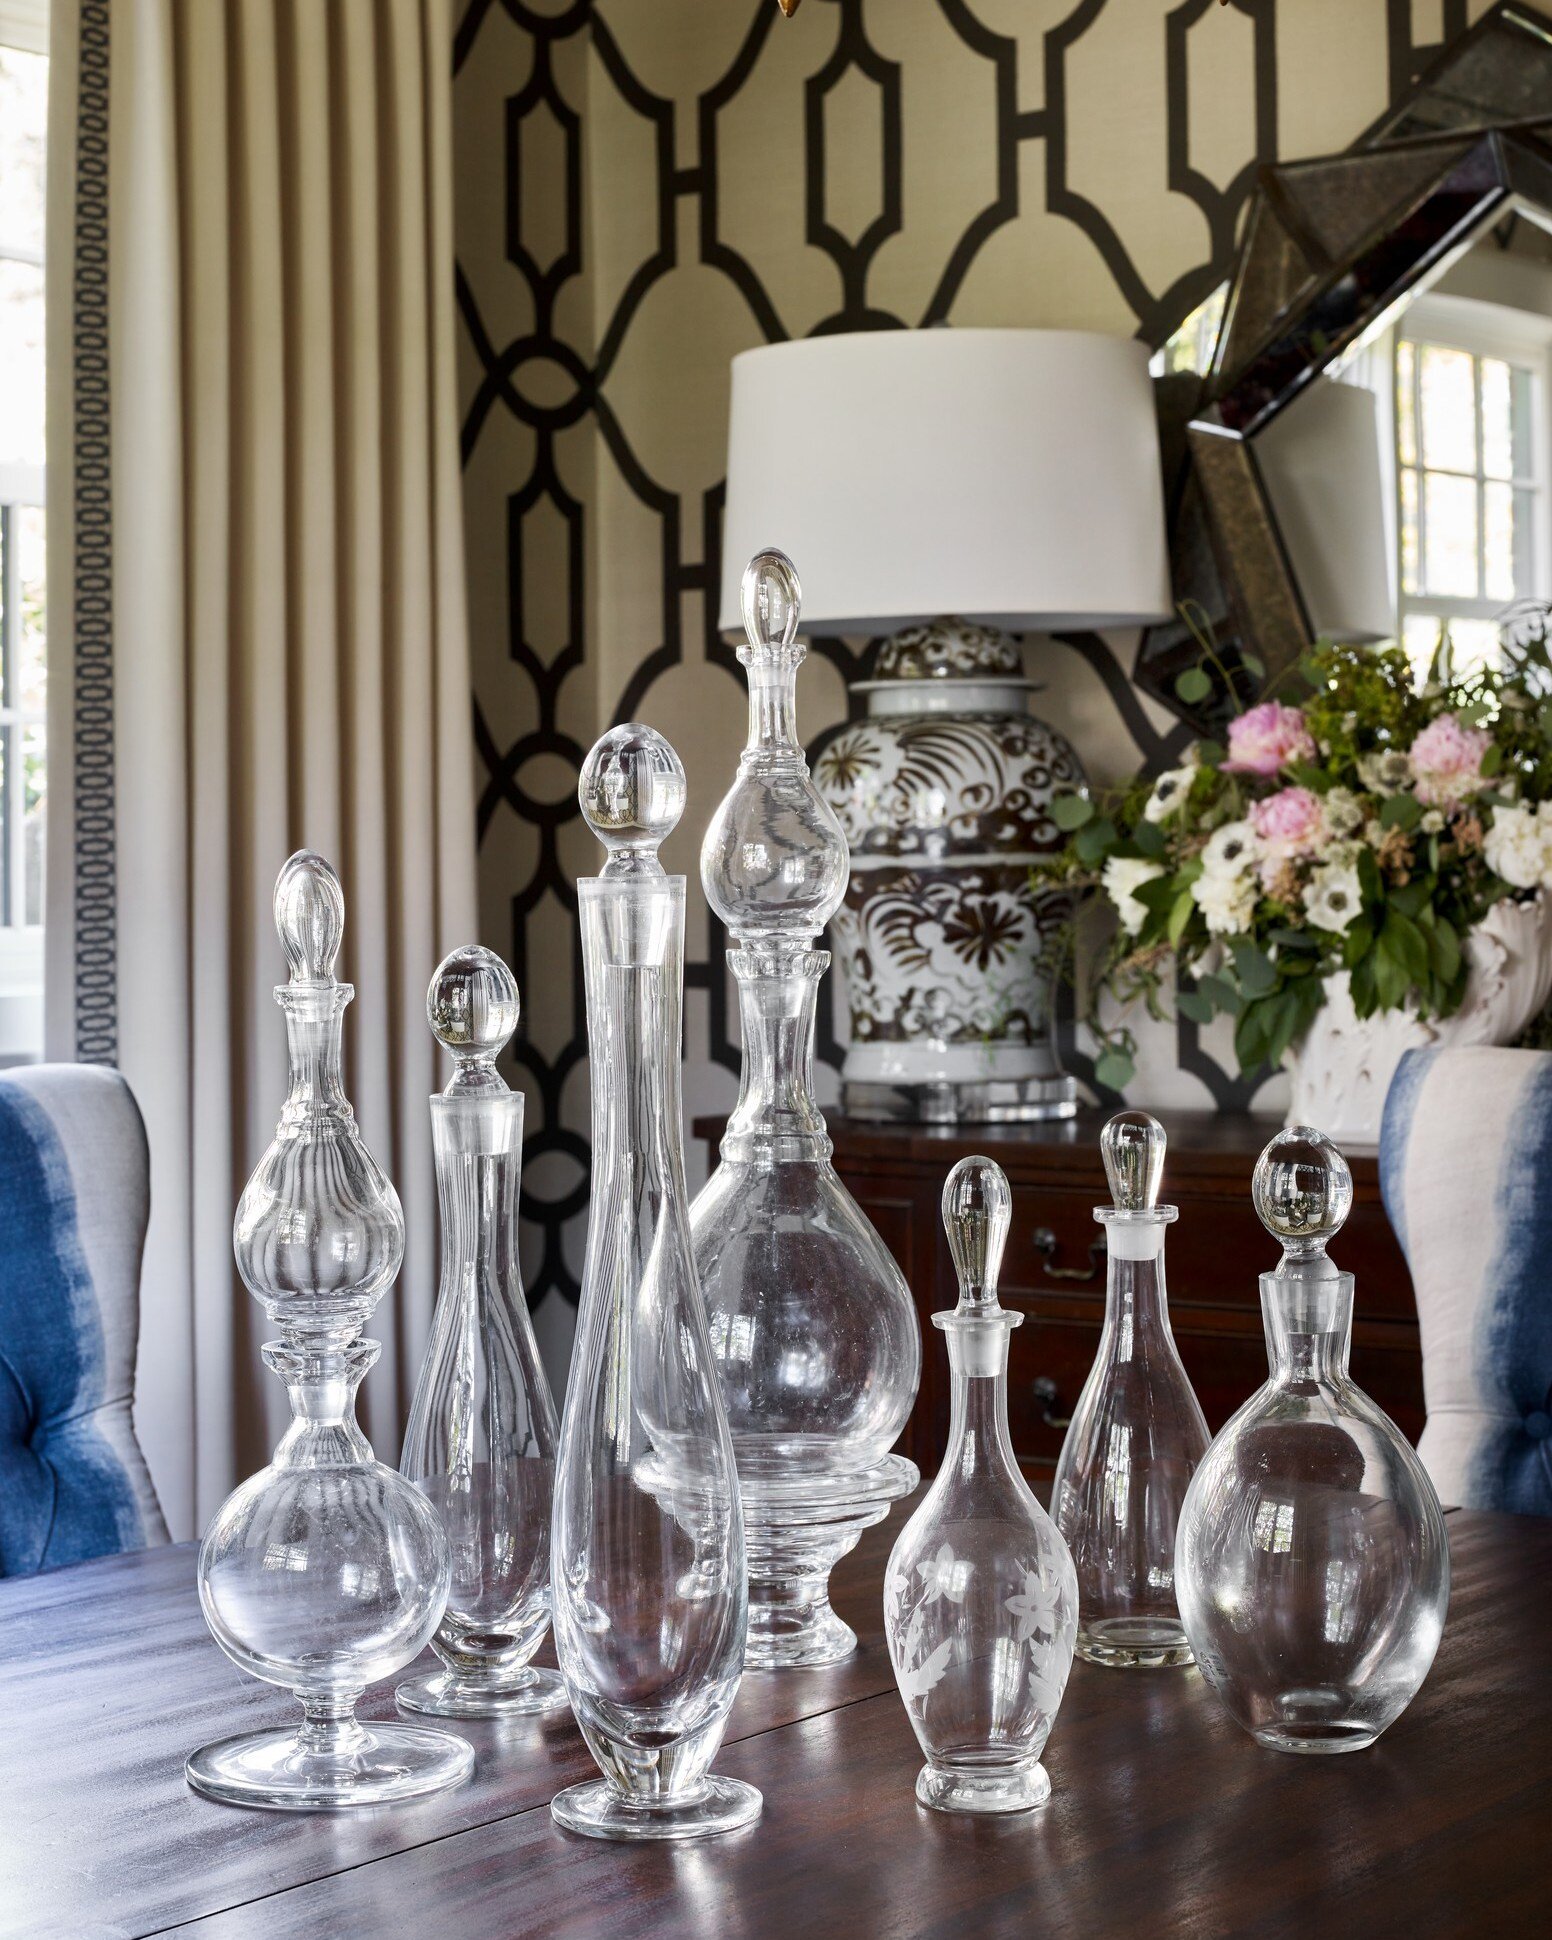 Glassware galore! Create an eye-catching centerpiece with elegant glass vases in various sizes. 

Photography by: @emilyfollowillphotographer
.
.
.
#catherinewilsoninteriors #ccwi #atlantadesigner #interiordesign #atlantahomes #residentialdesign #hom